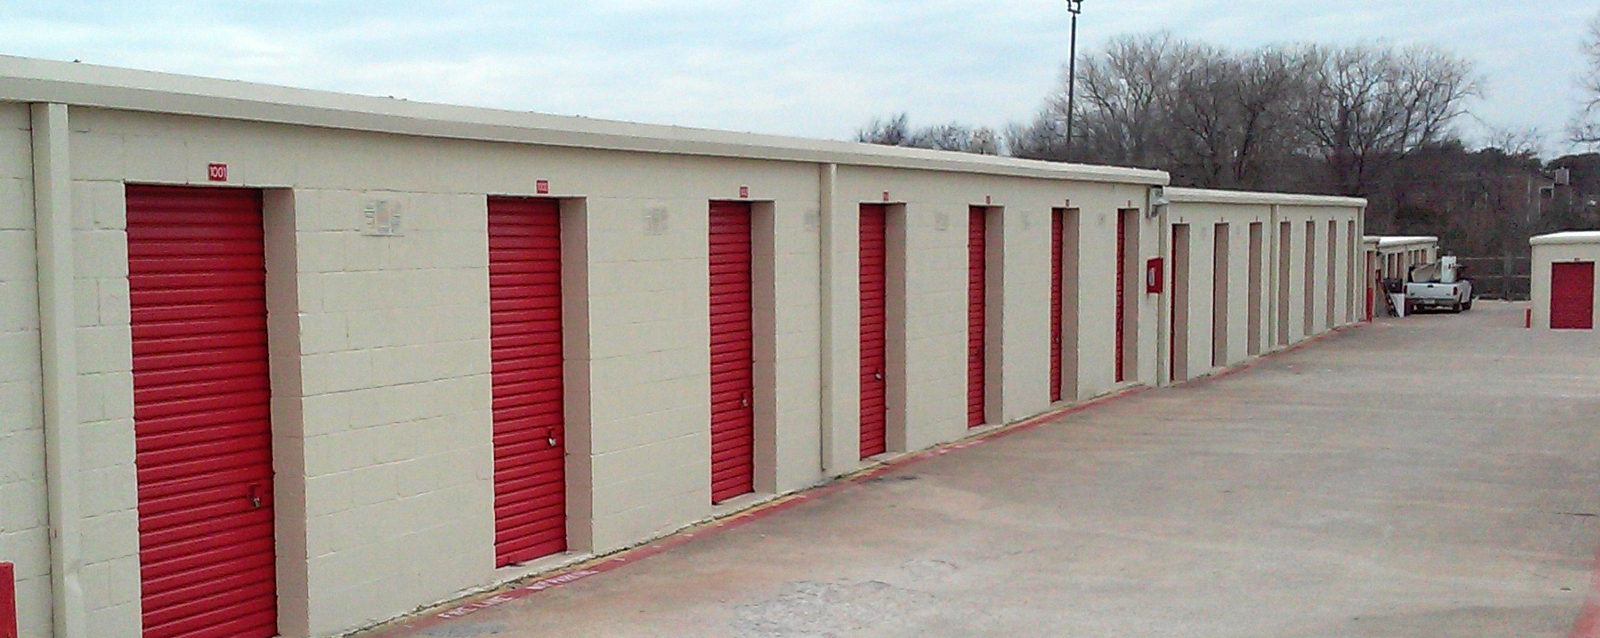 Storage Units in Arlington, TX 